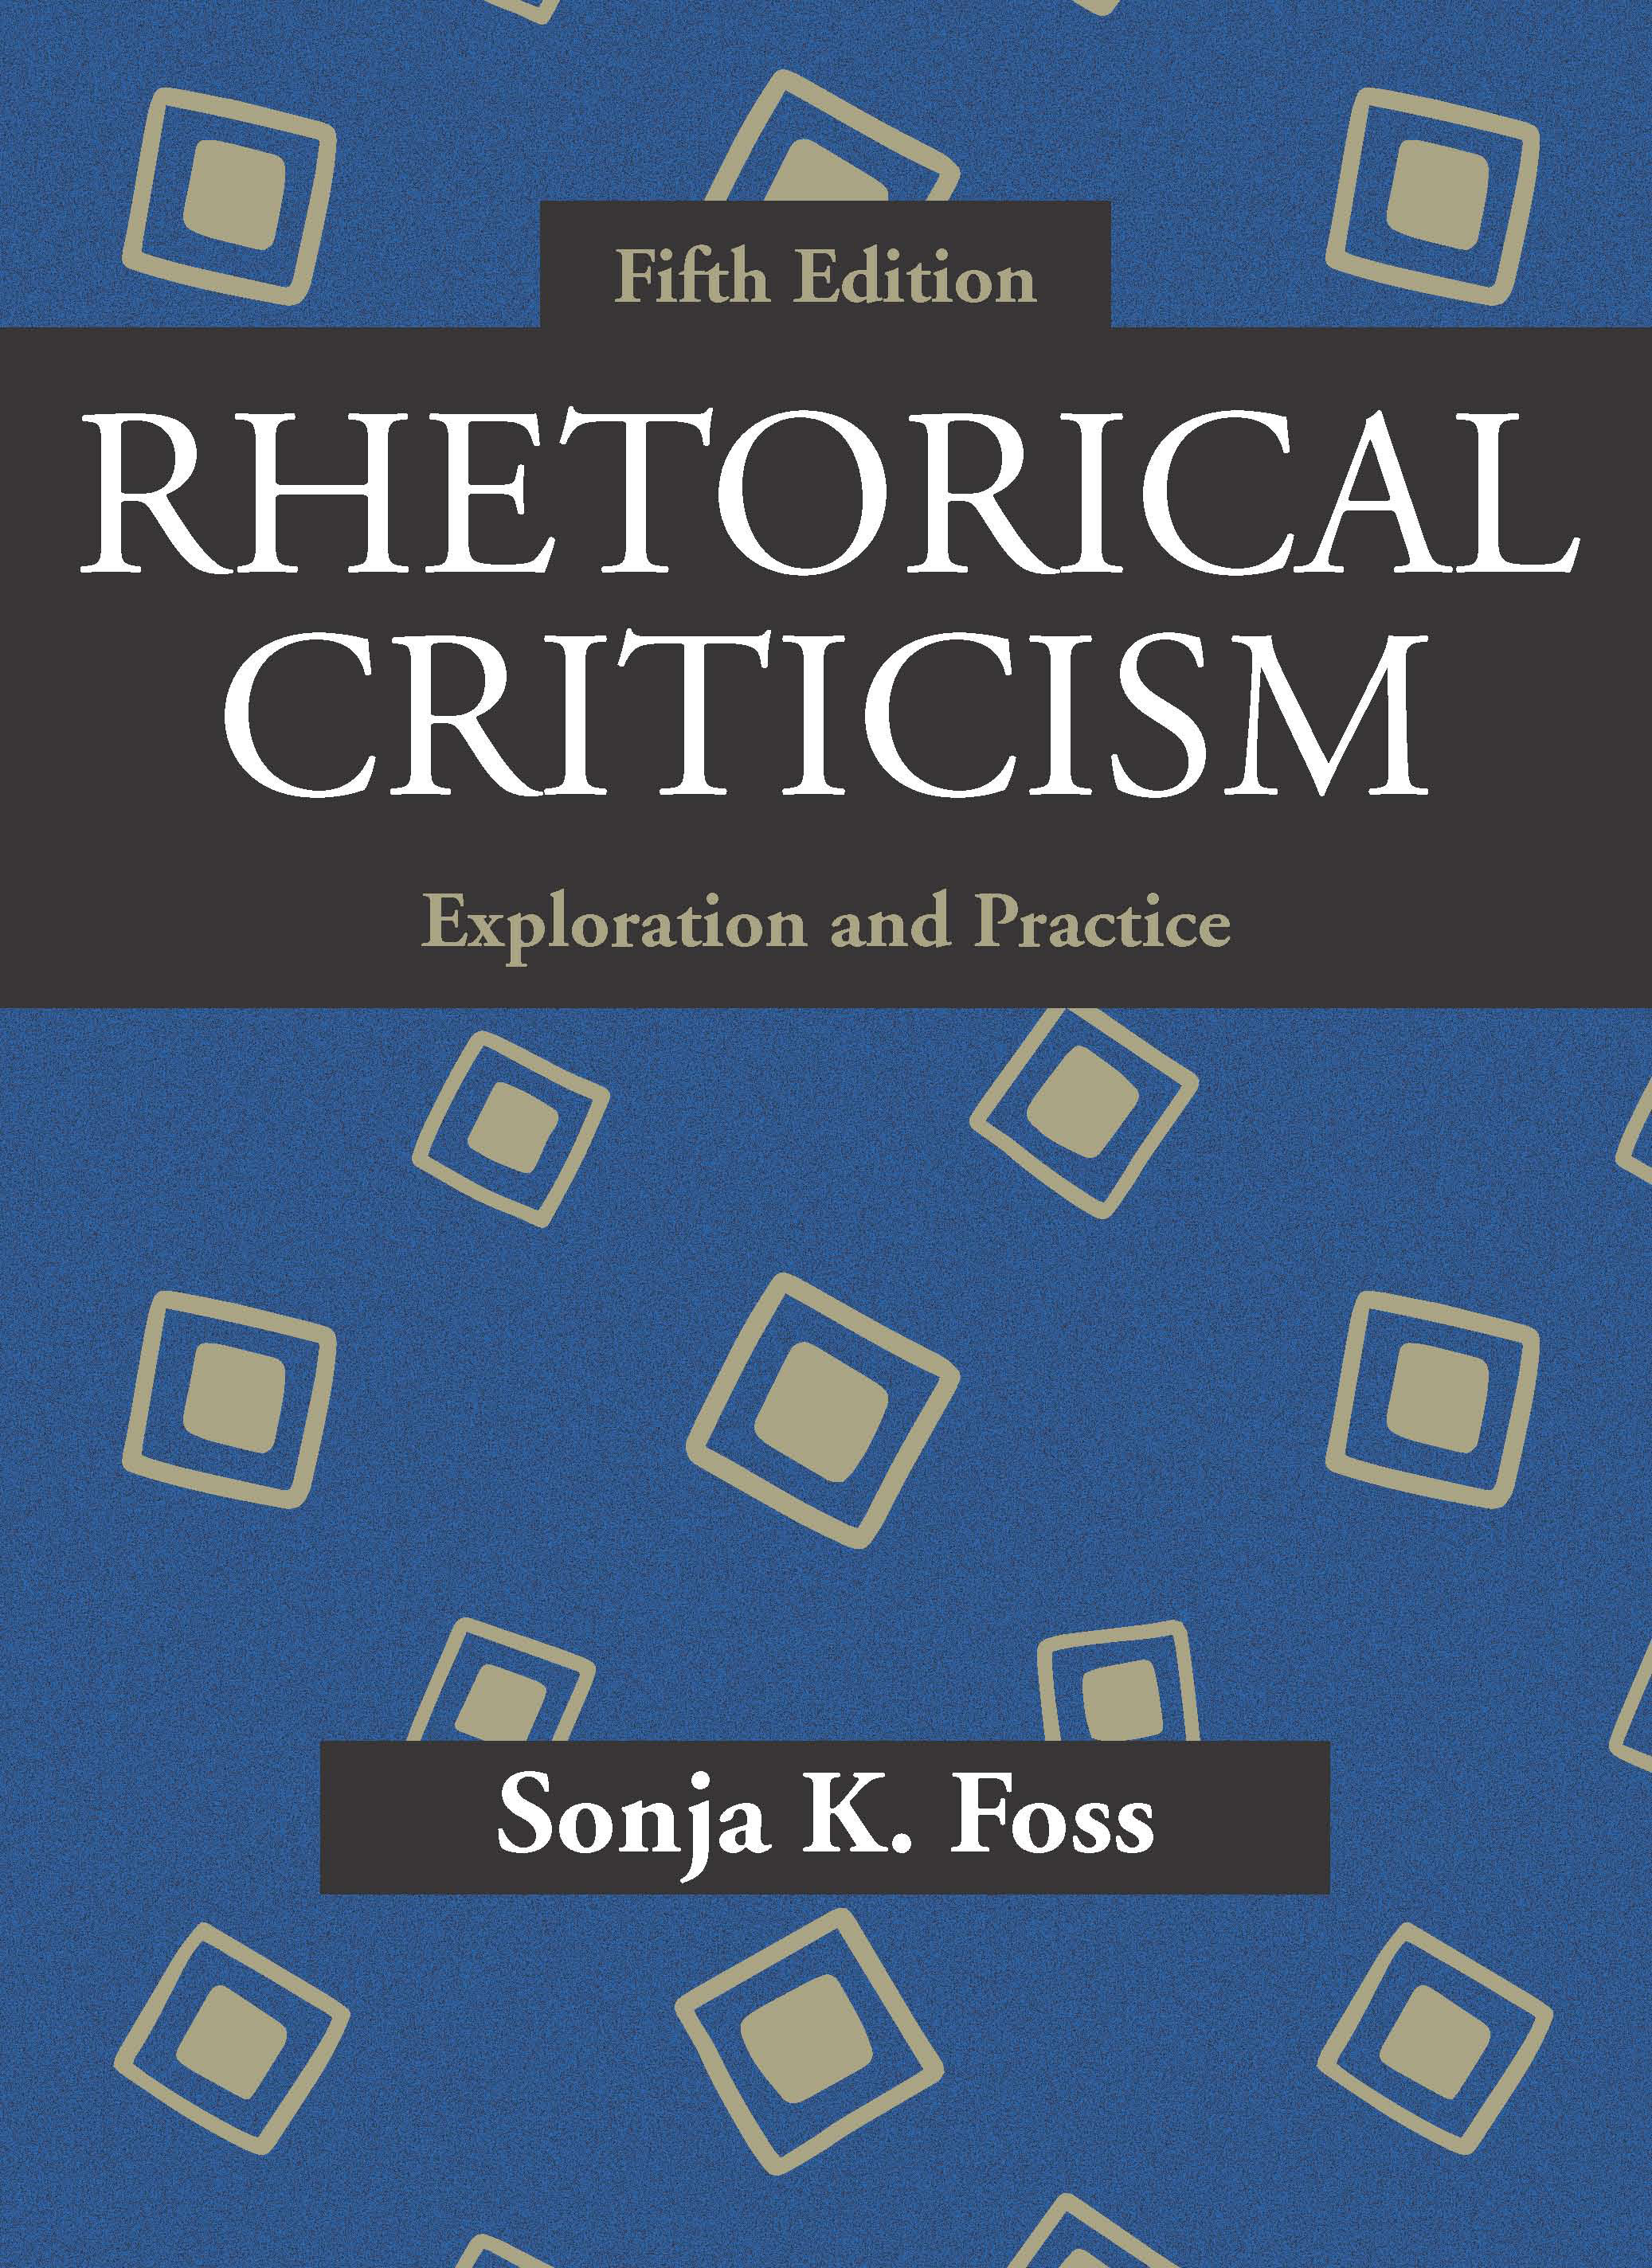 Rhetorical Criticism: Exploration and Practice by Sonja K. Foss